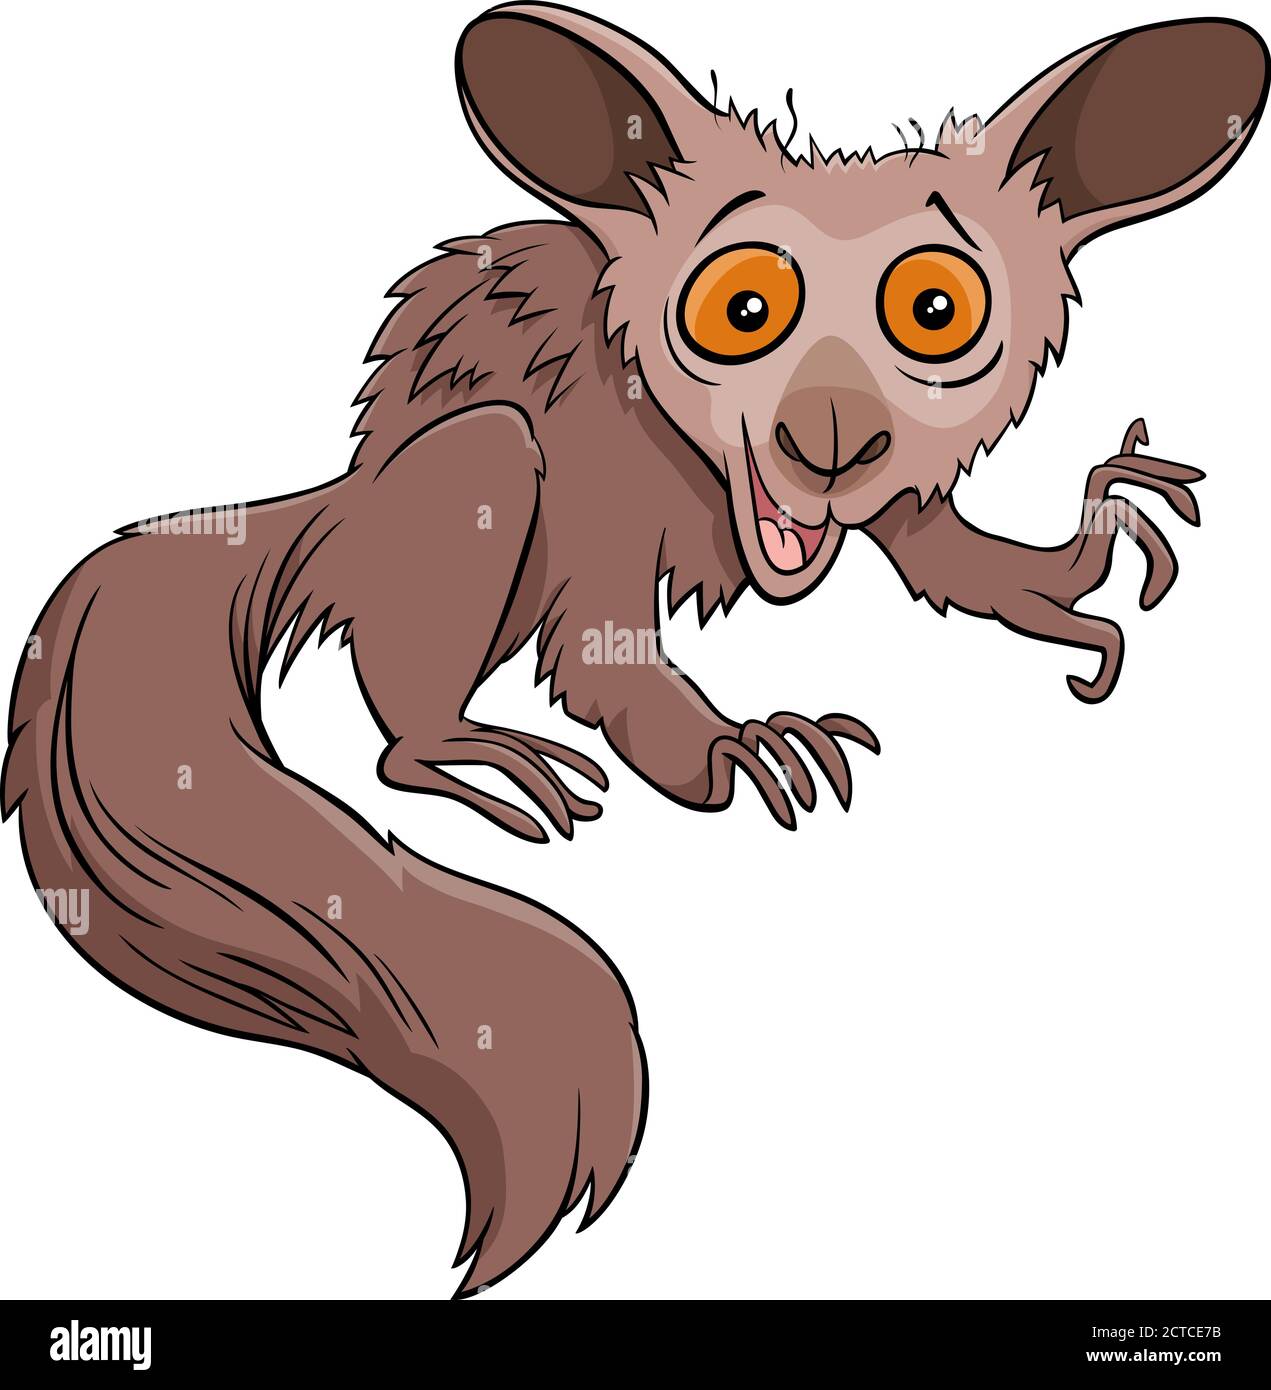 Cartoon Illustration of Aye-Aye Wild Animal Character Stock Vector